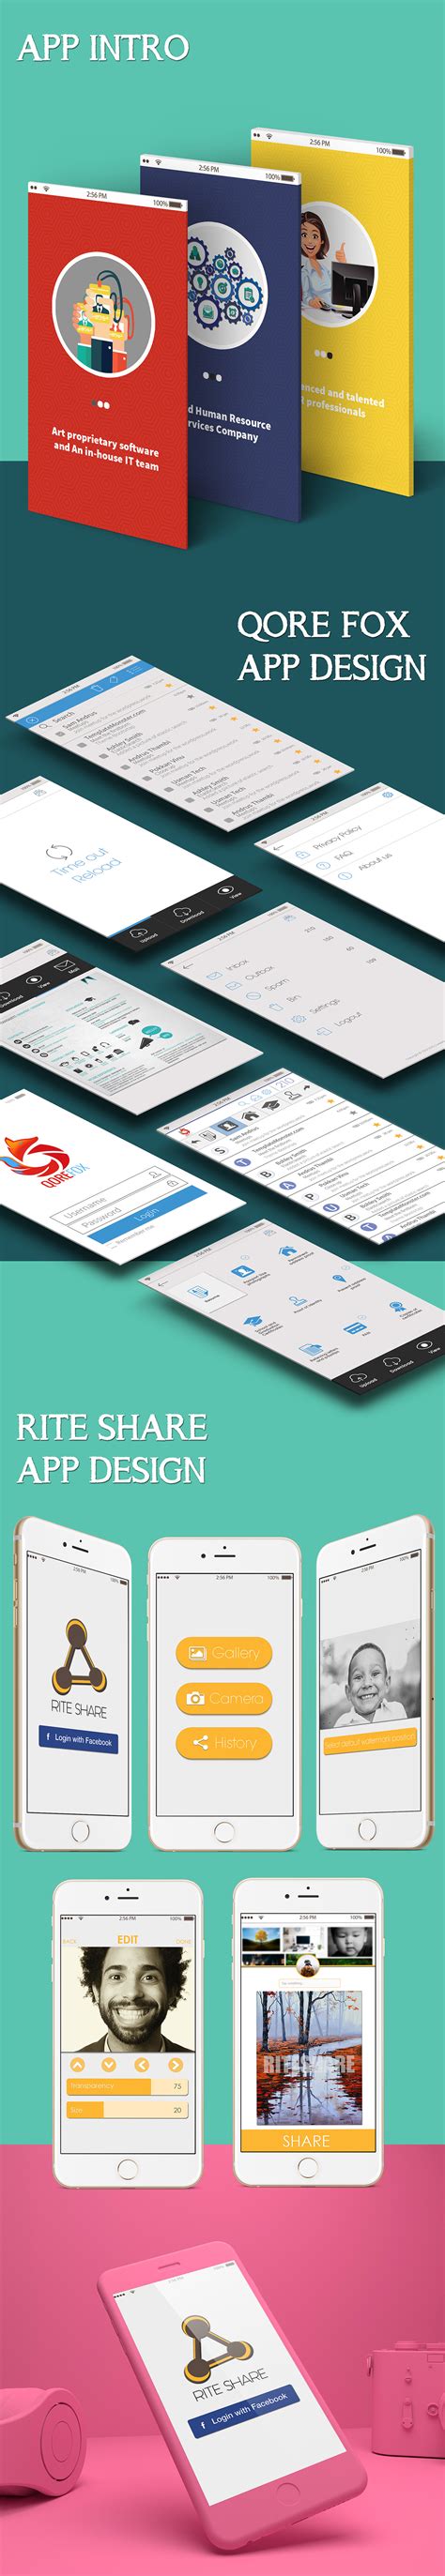 Ui Design App Intro On Behance